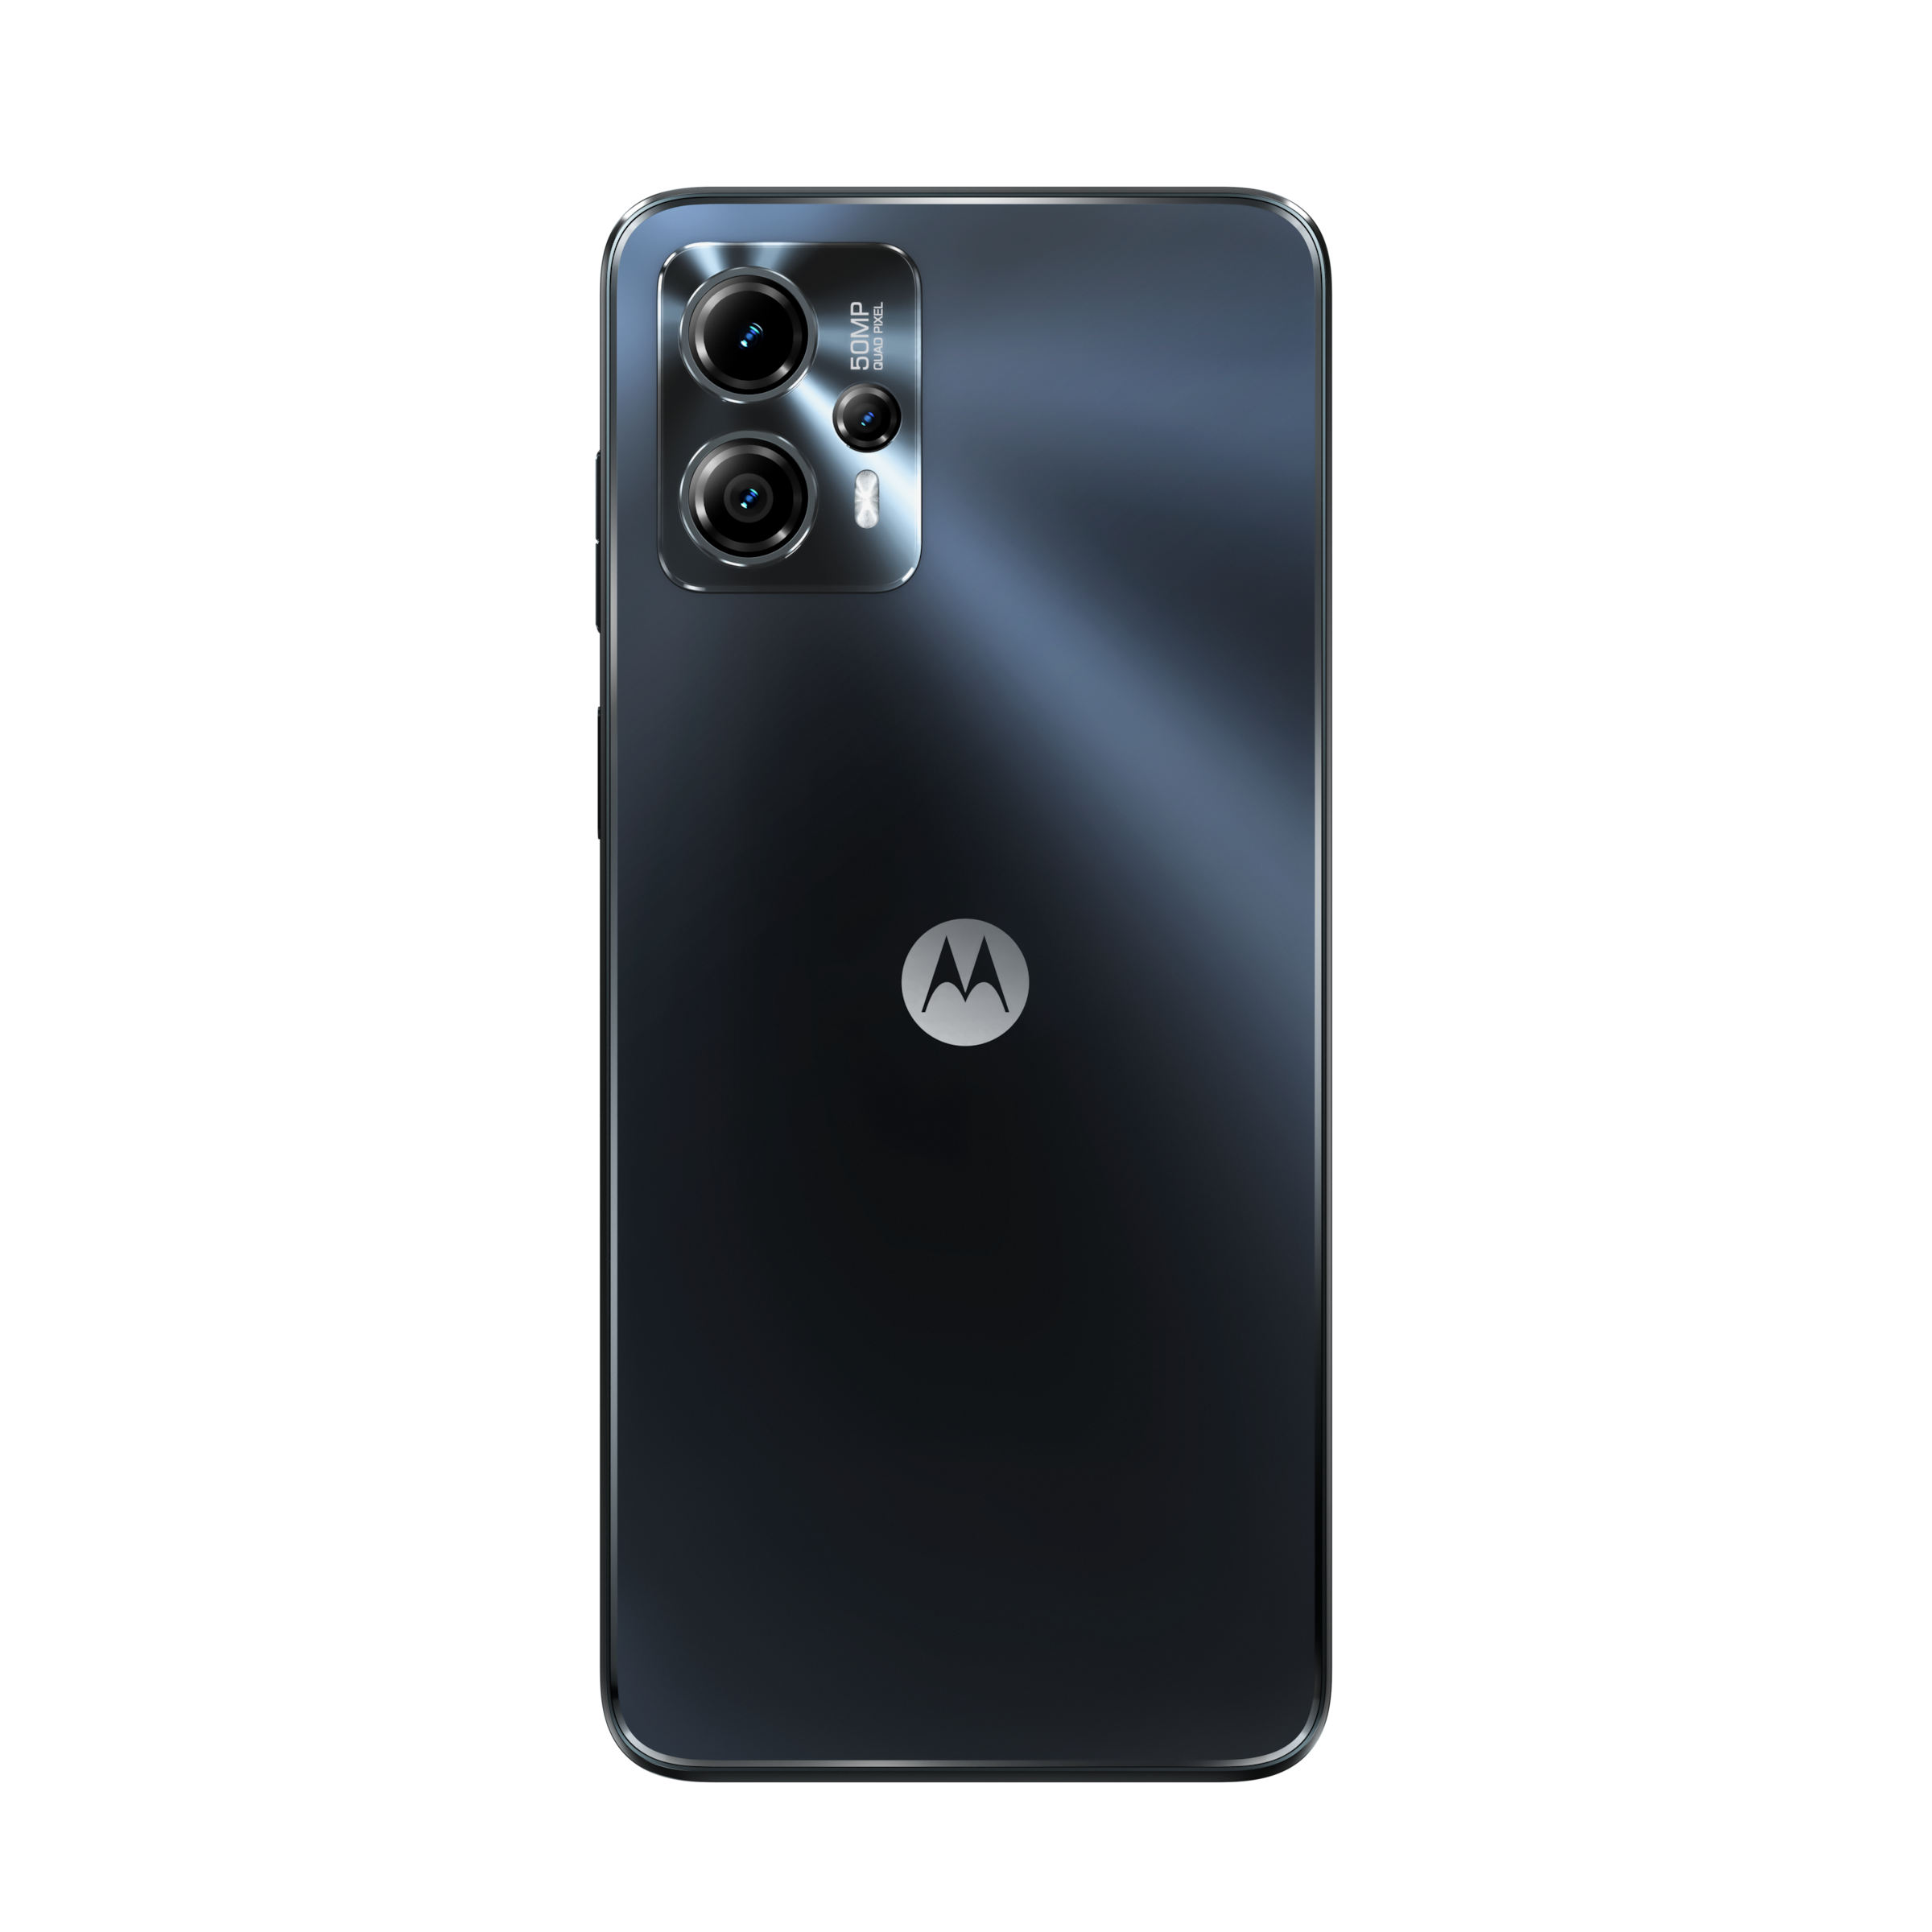 ❤ Motorola Smartphone »moto g¹³«, Matte Charcoal, 16,56 cm/6,52 Zoll, 128 GB  Speicherplatz, 50 MP Kamera bestellen im Jelmoli-Online Shop